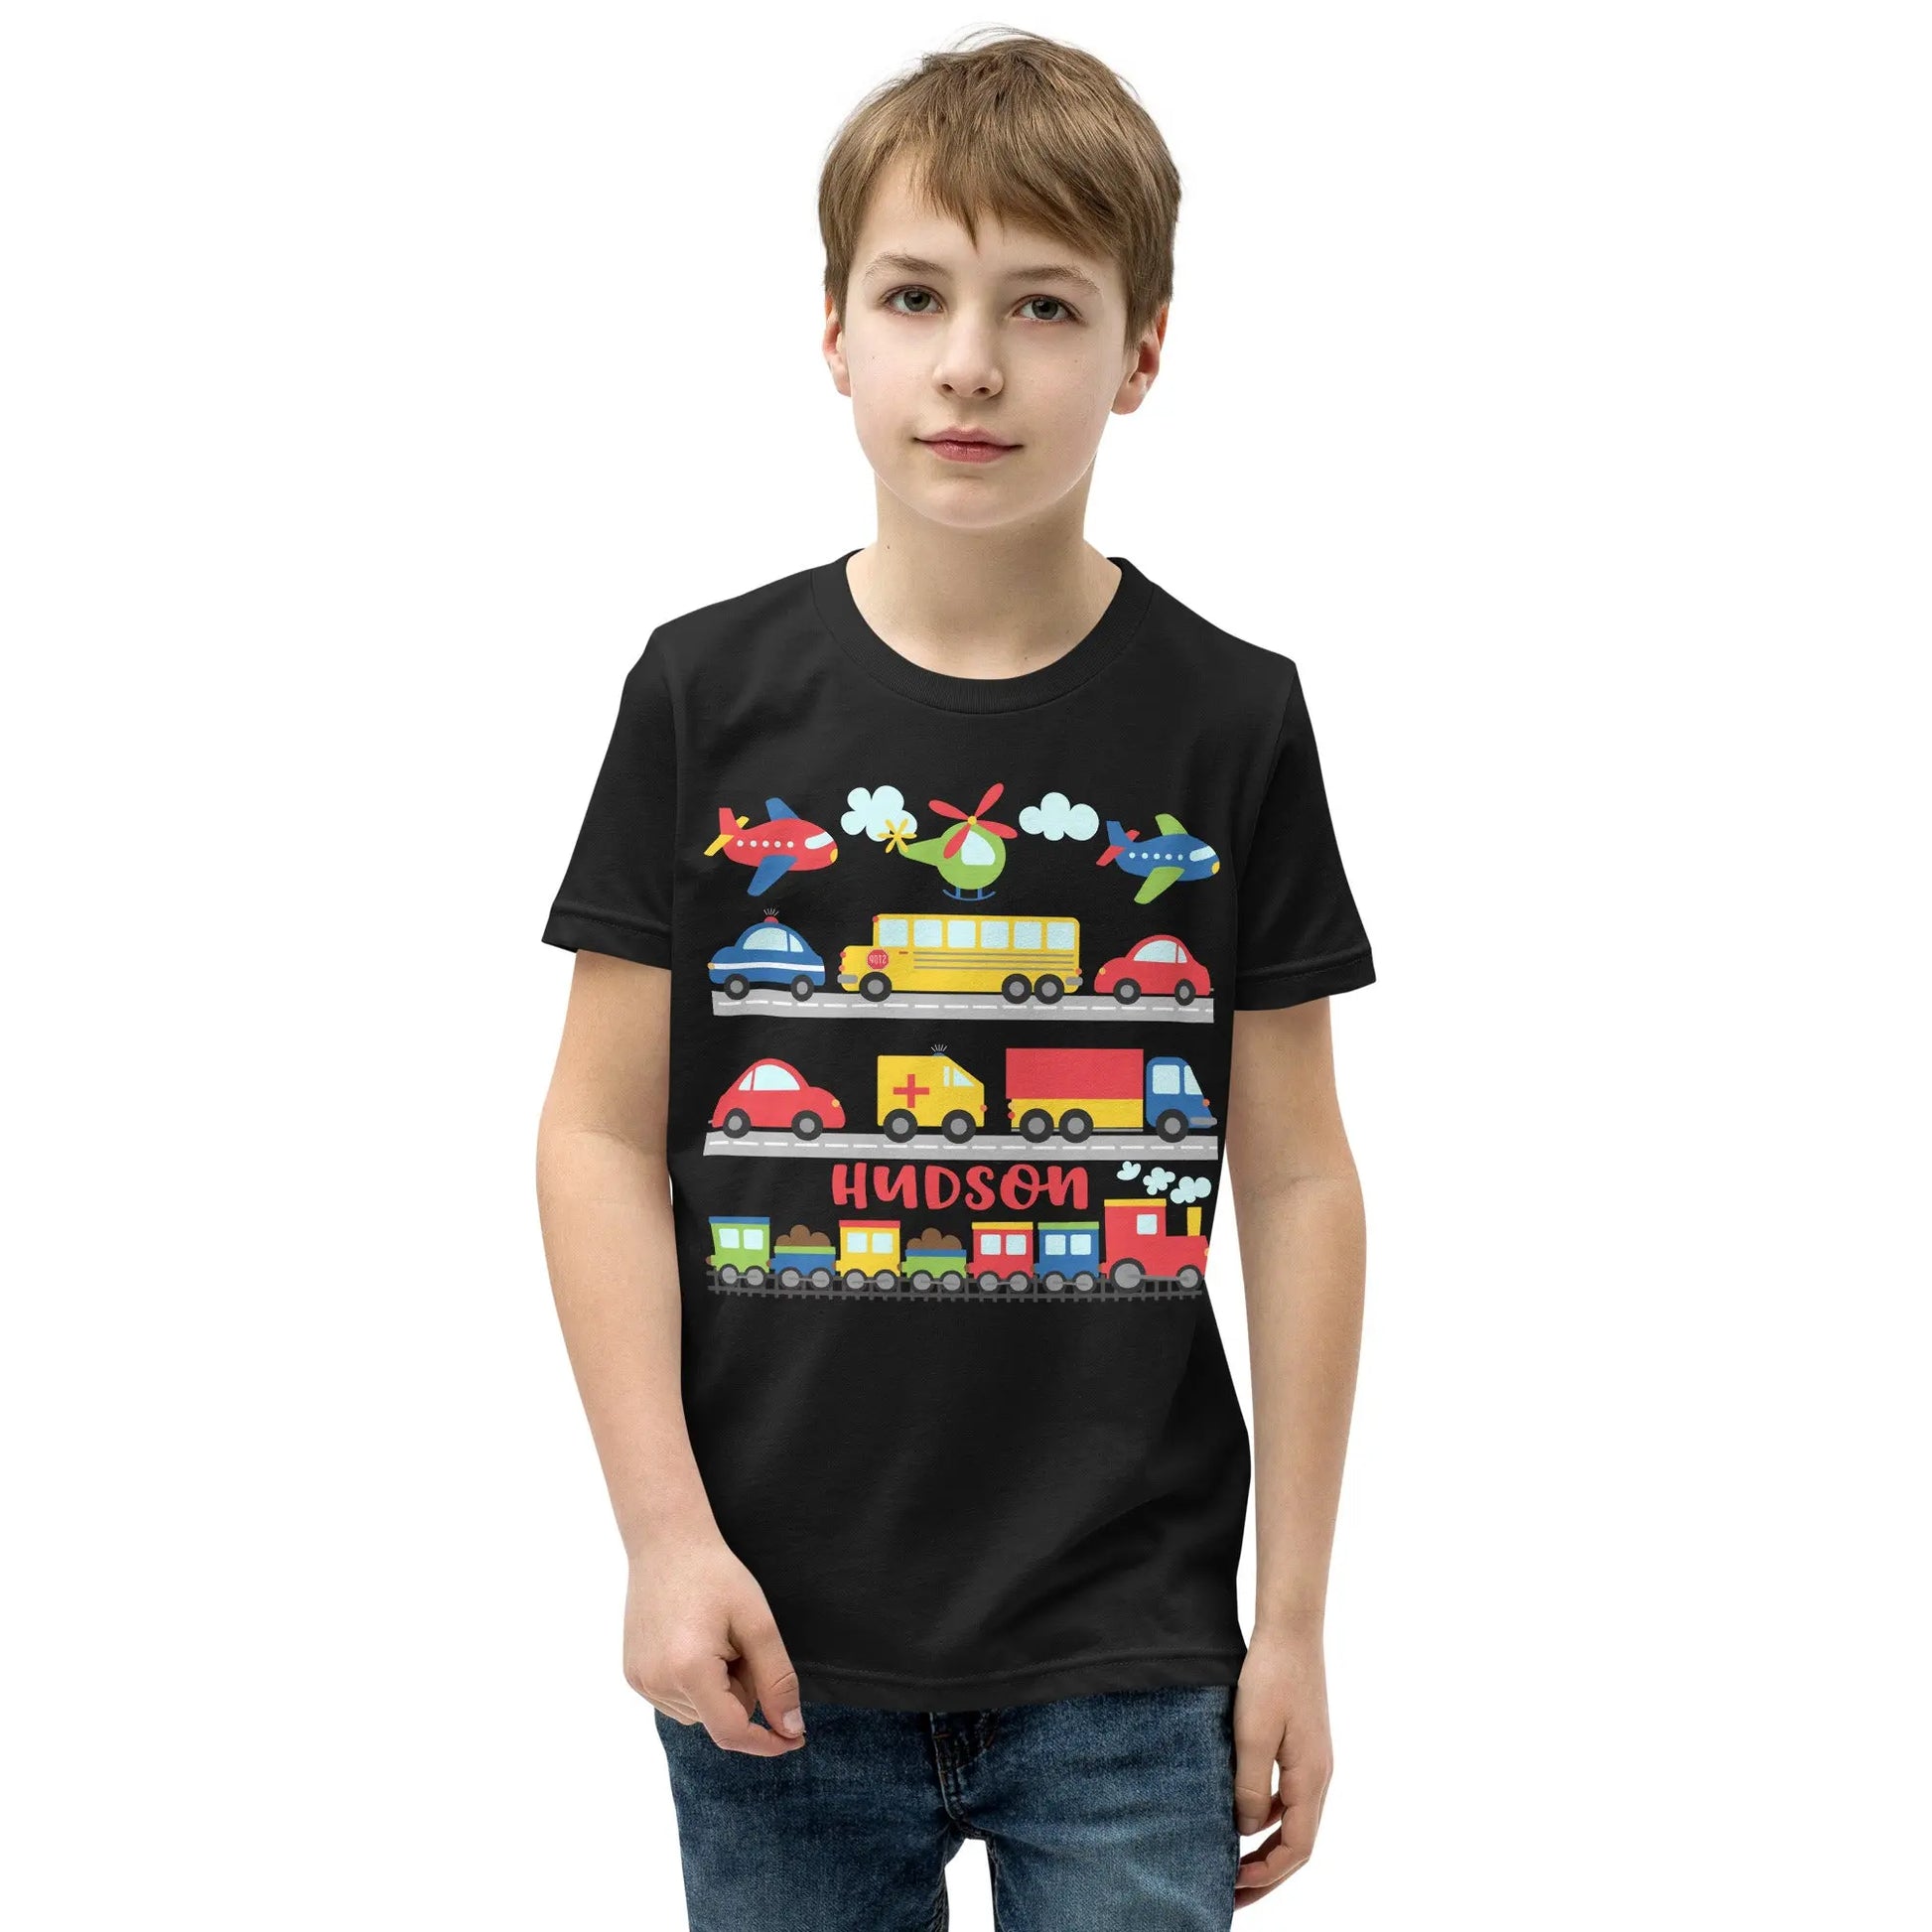 Transportation Personalized Youth Short Sleeve T-Shirt Amazing Faith Designs